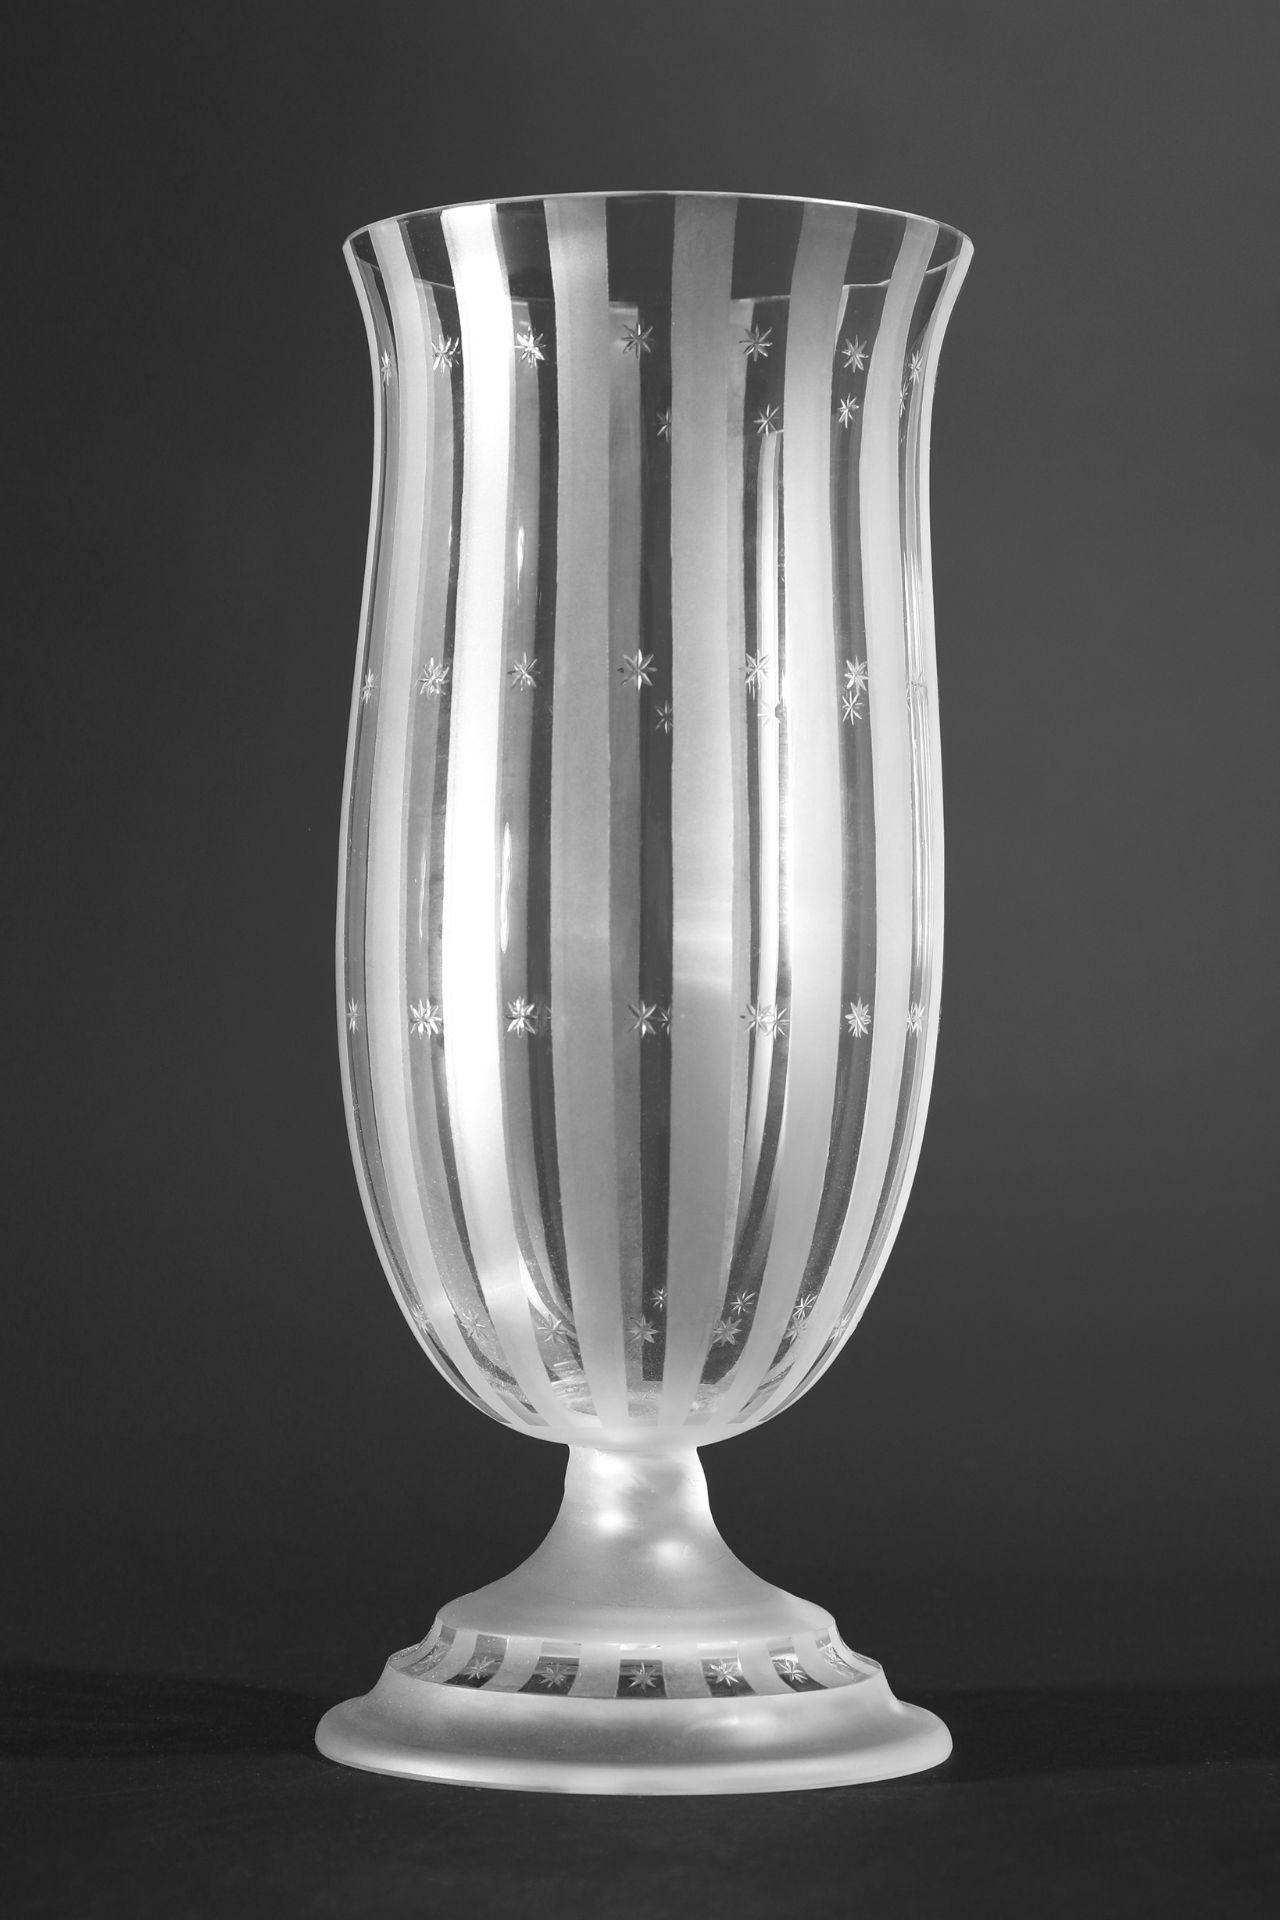 Josef Hoffmann, Wiener Werkstätte, Meyr's Neffe, Star cut Vase